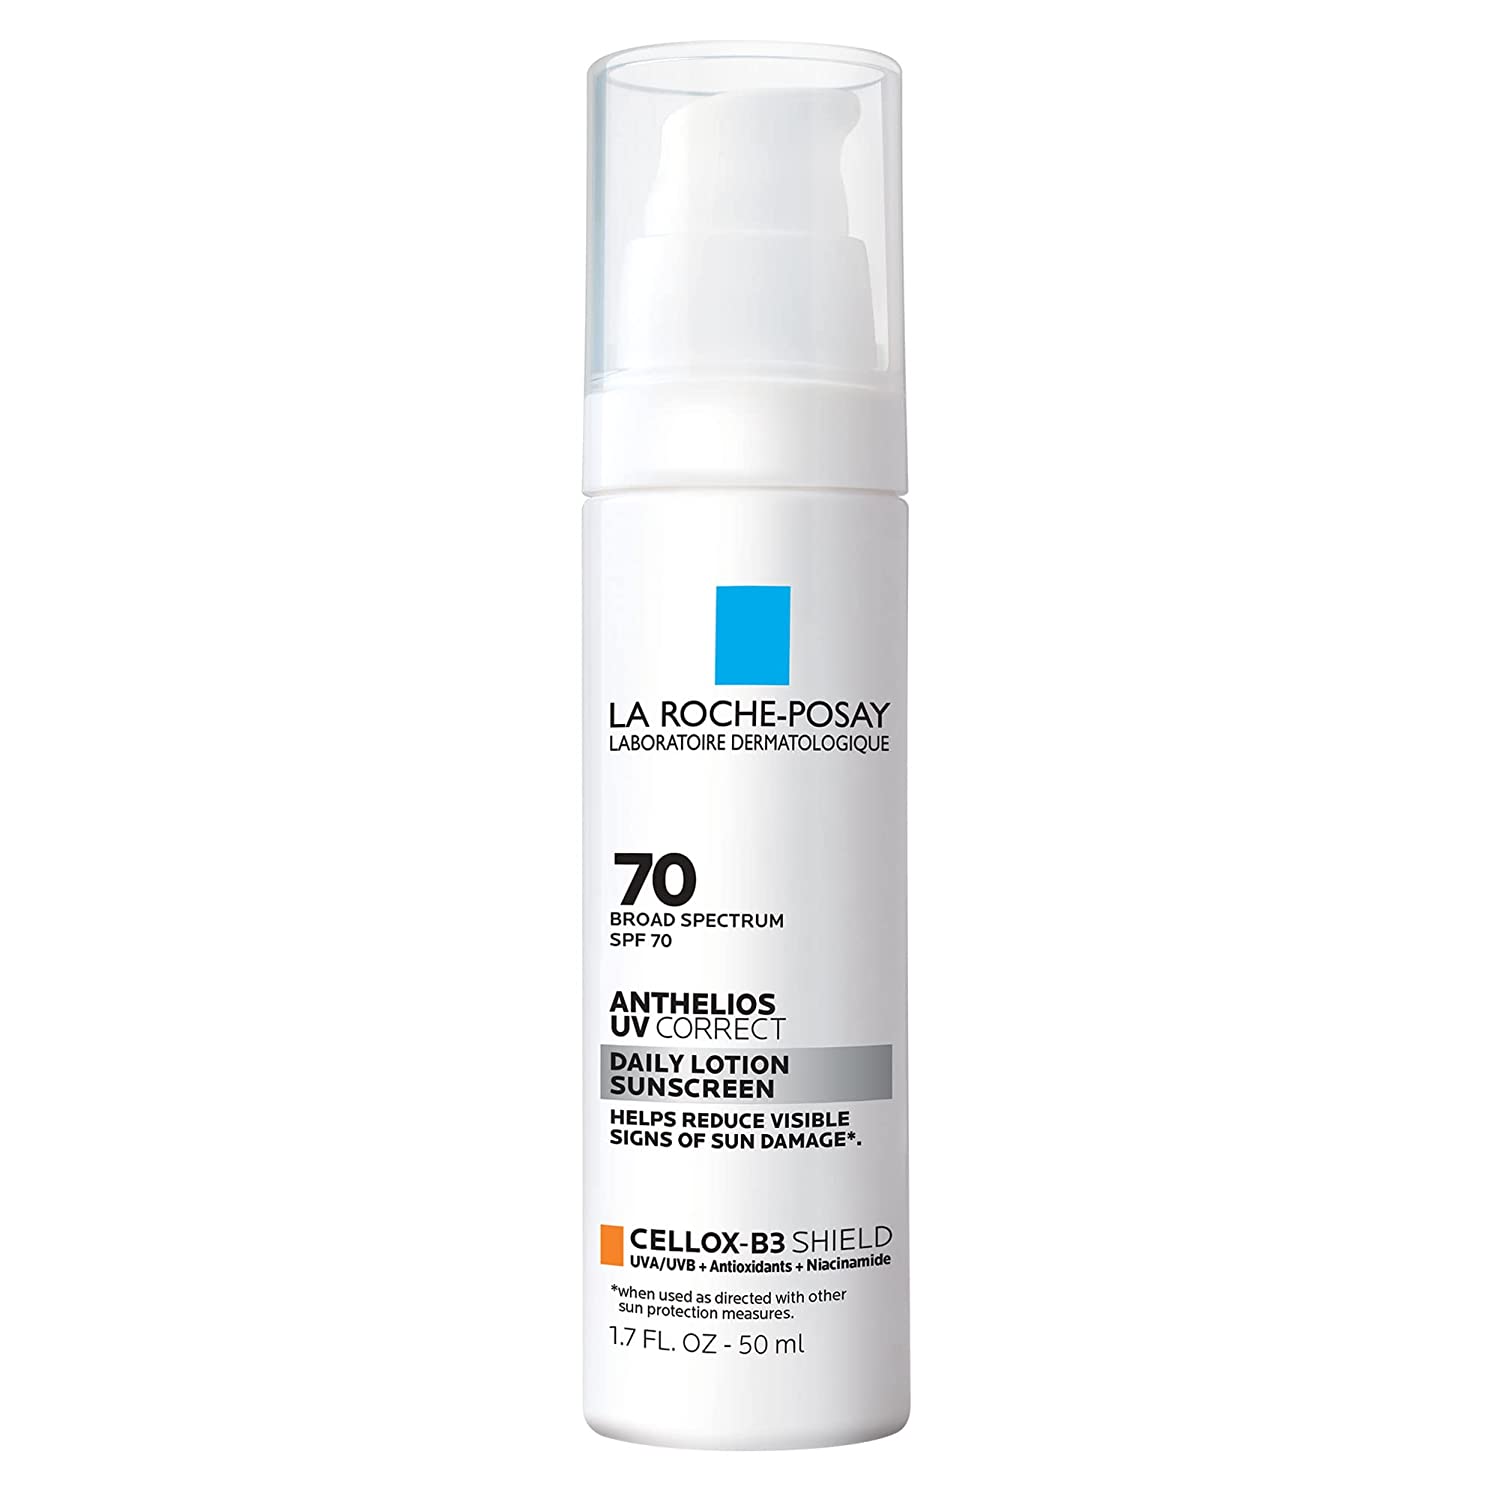 La Roche-Posay UV Correct Face Sunscreen SPF 70 with Niacinamide